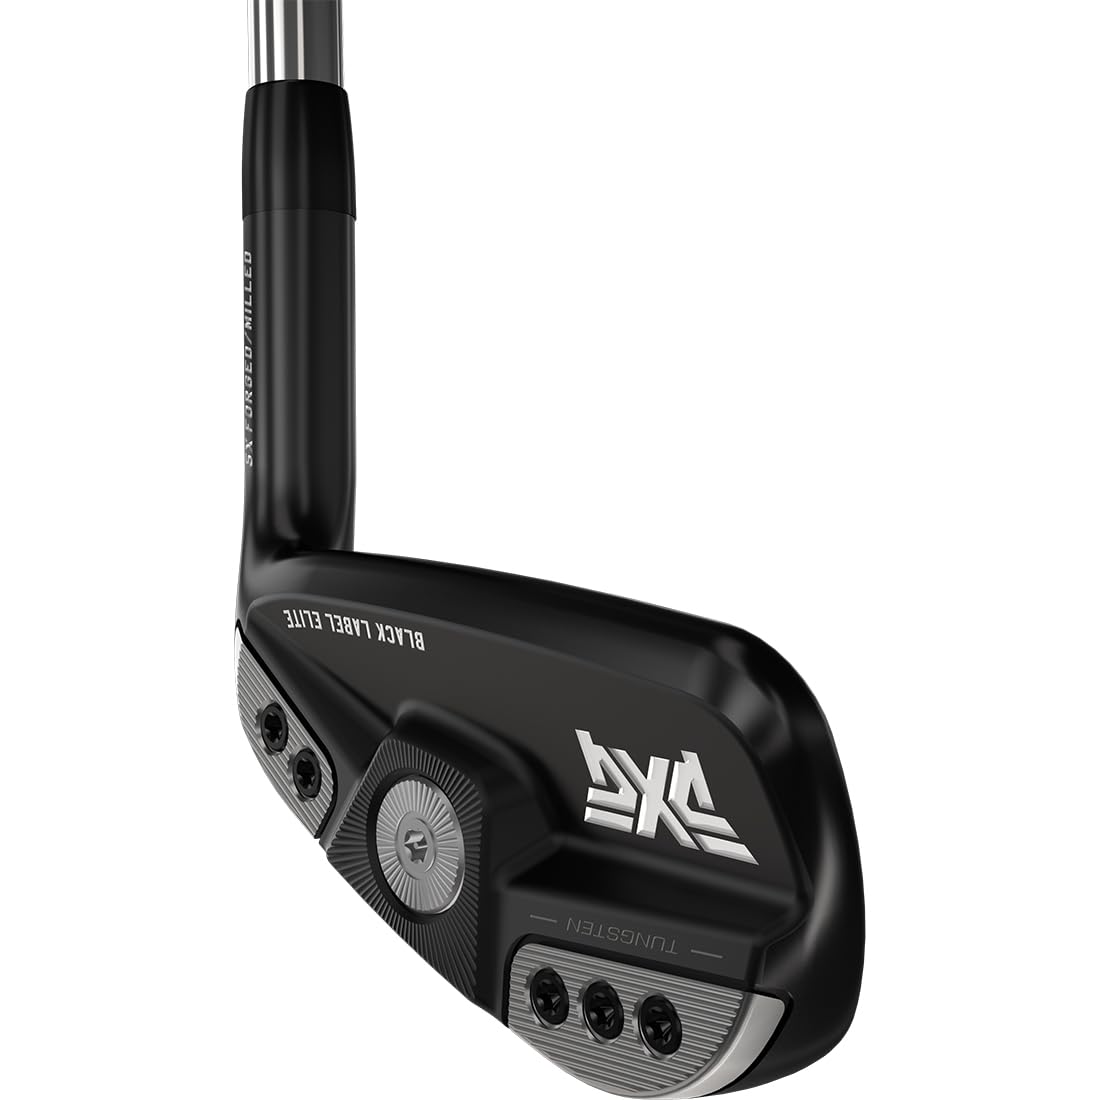 PXG 0311 P GEN5 Xtreme Dark Golf Iron Set - Right-Handed Black Golf Irons Set for Men